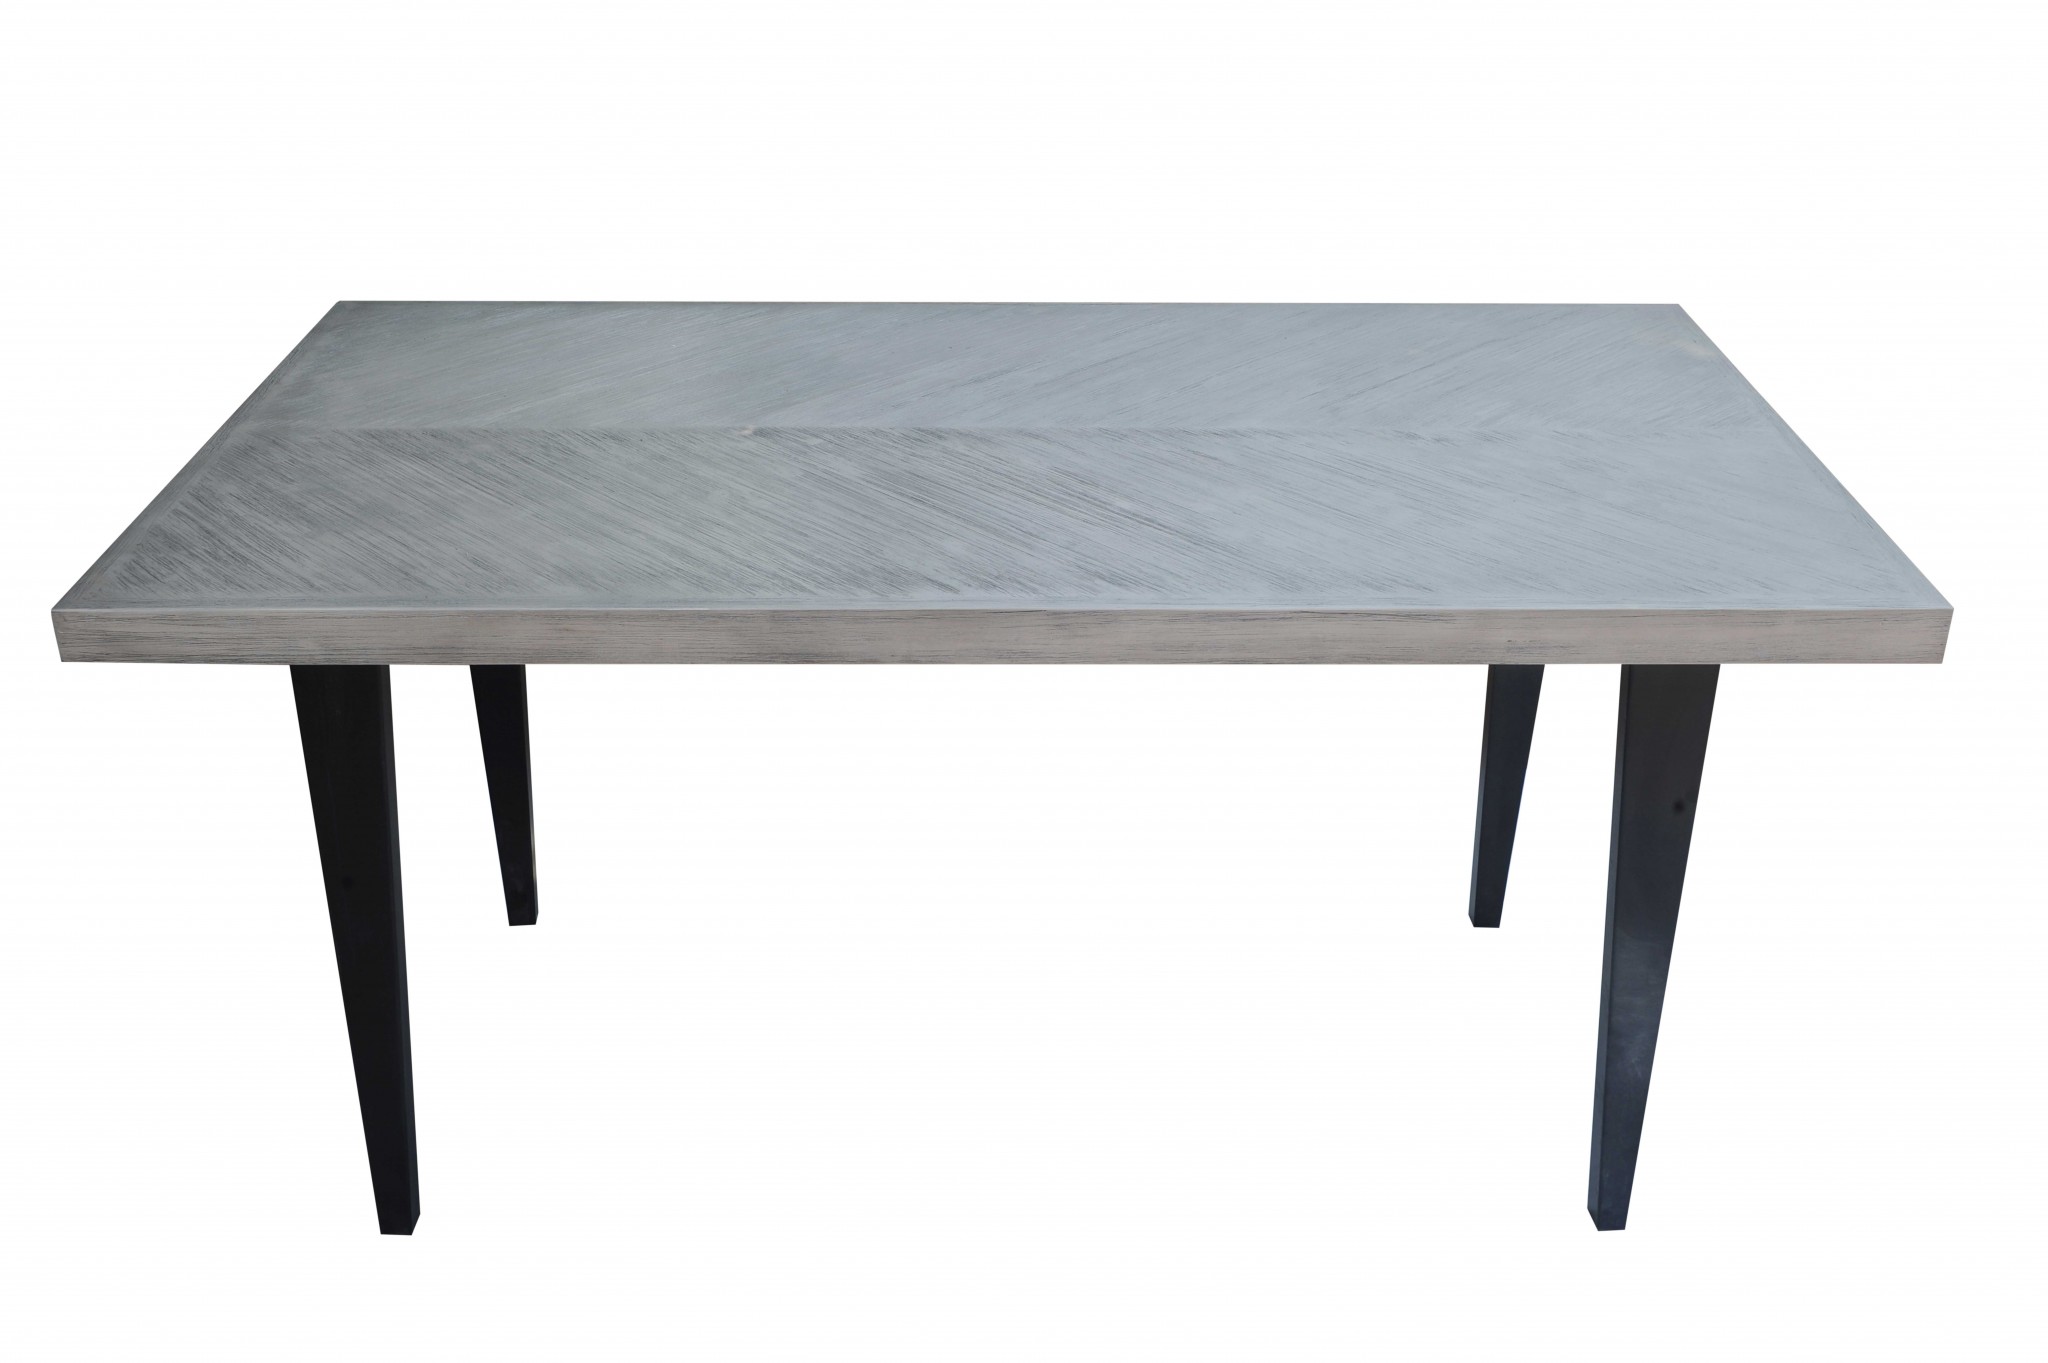 38" X 72" X 36" Black Acacia Top Metal Rectangle Counter Height Dining Table